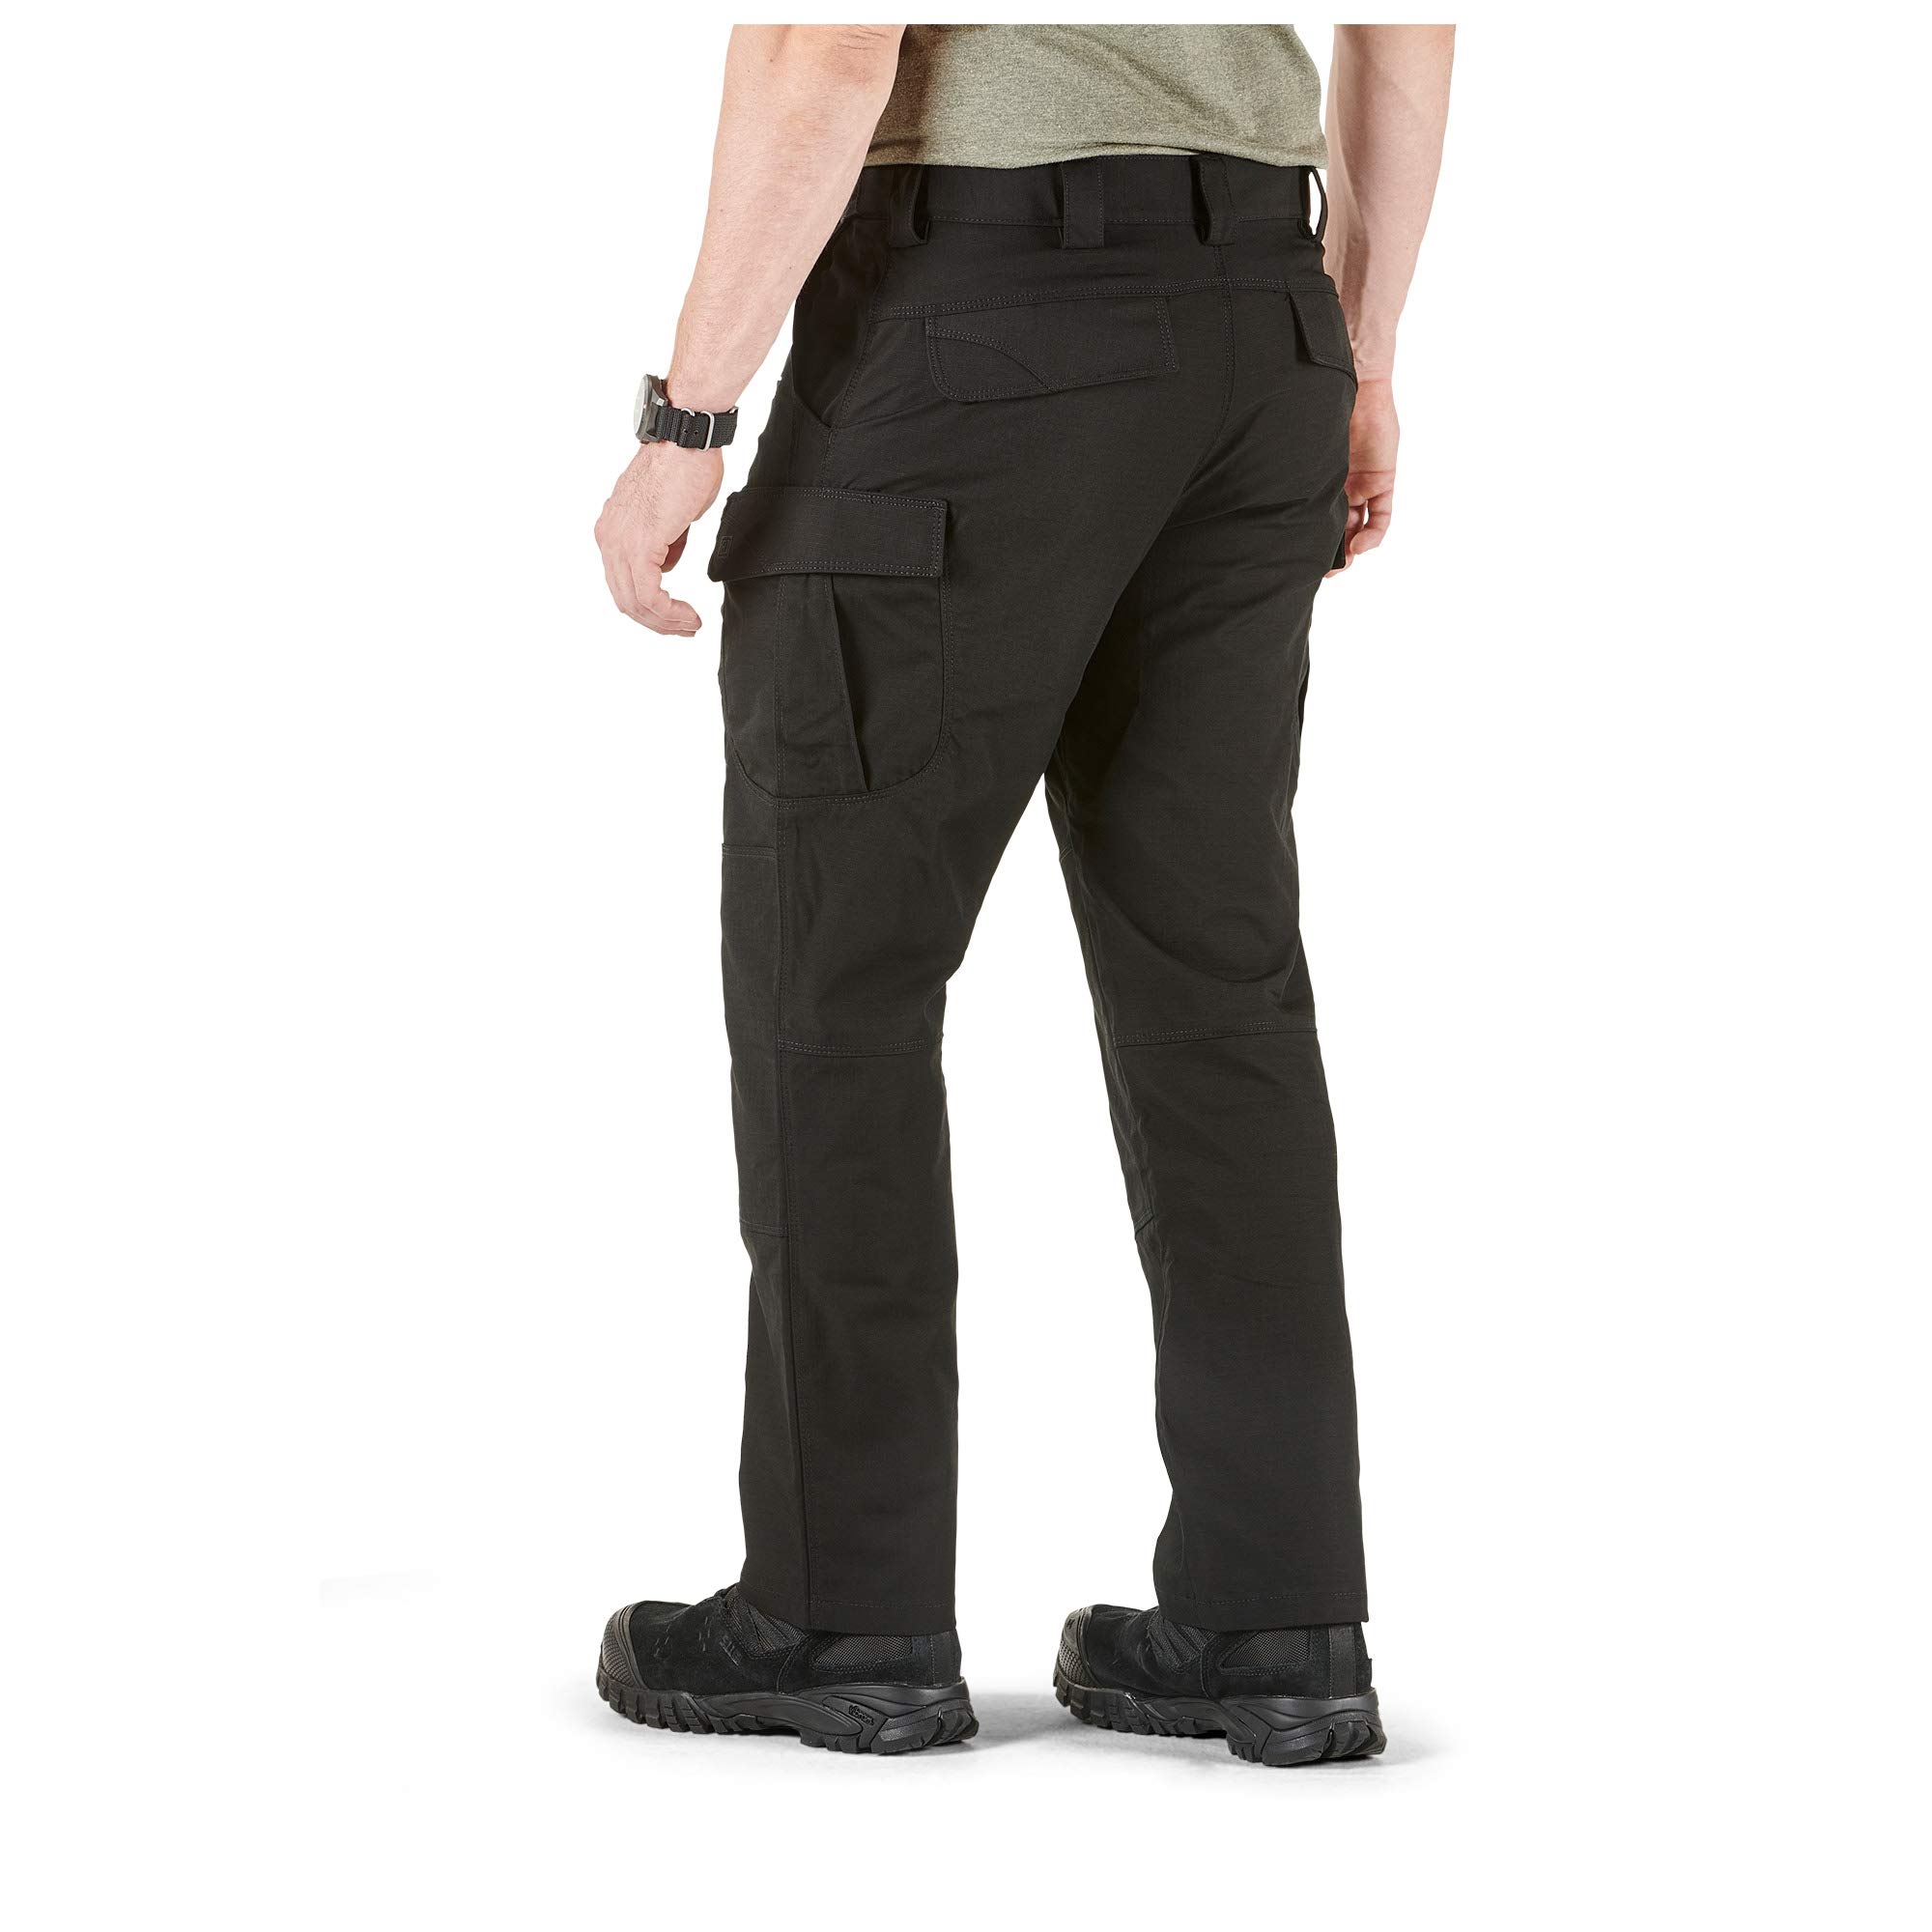 5.11 Tactical Men's Stryke Operator Uniform Pants w/Flex-Tac Mechanical Stretch, Style 74369